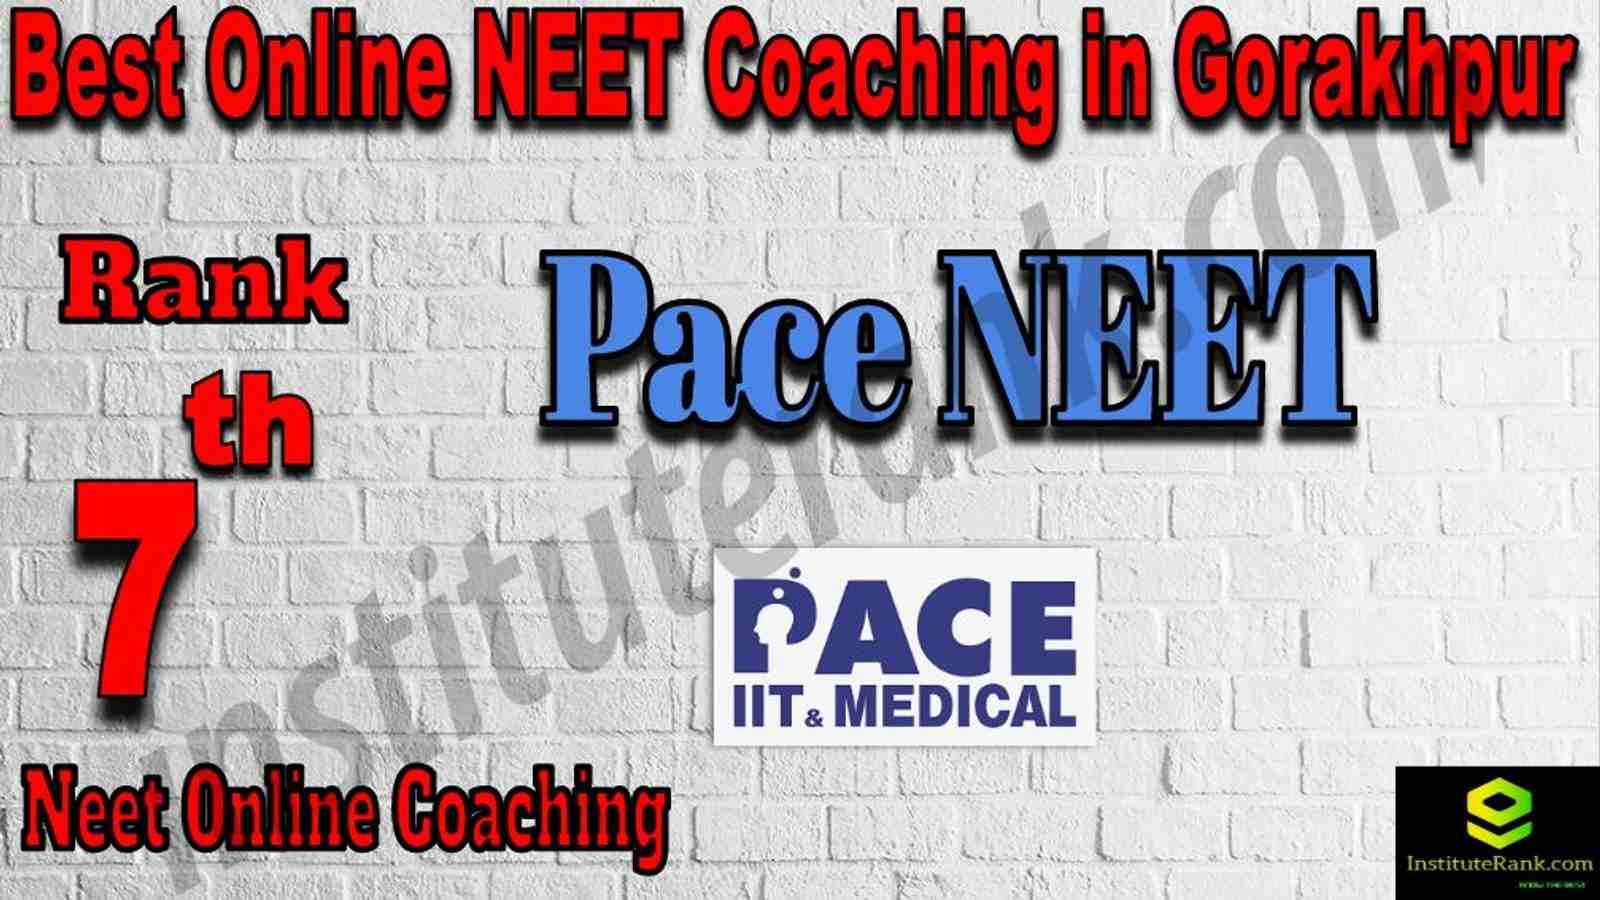 7th Best Online Neet Coaching in Gorakhpur